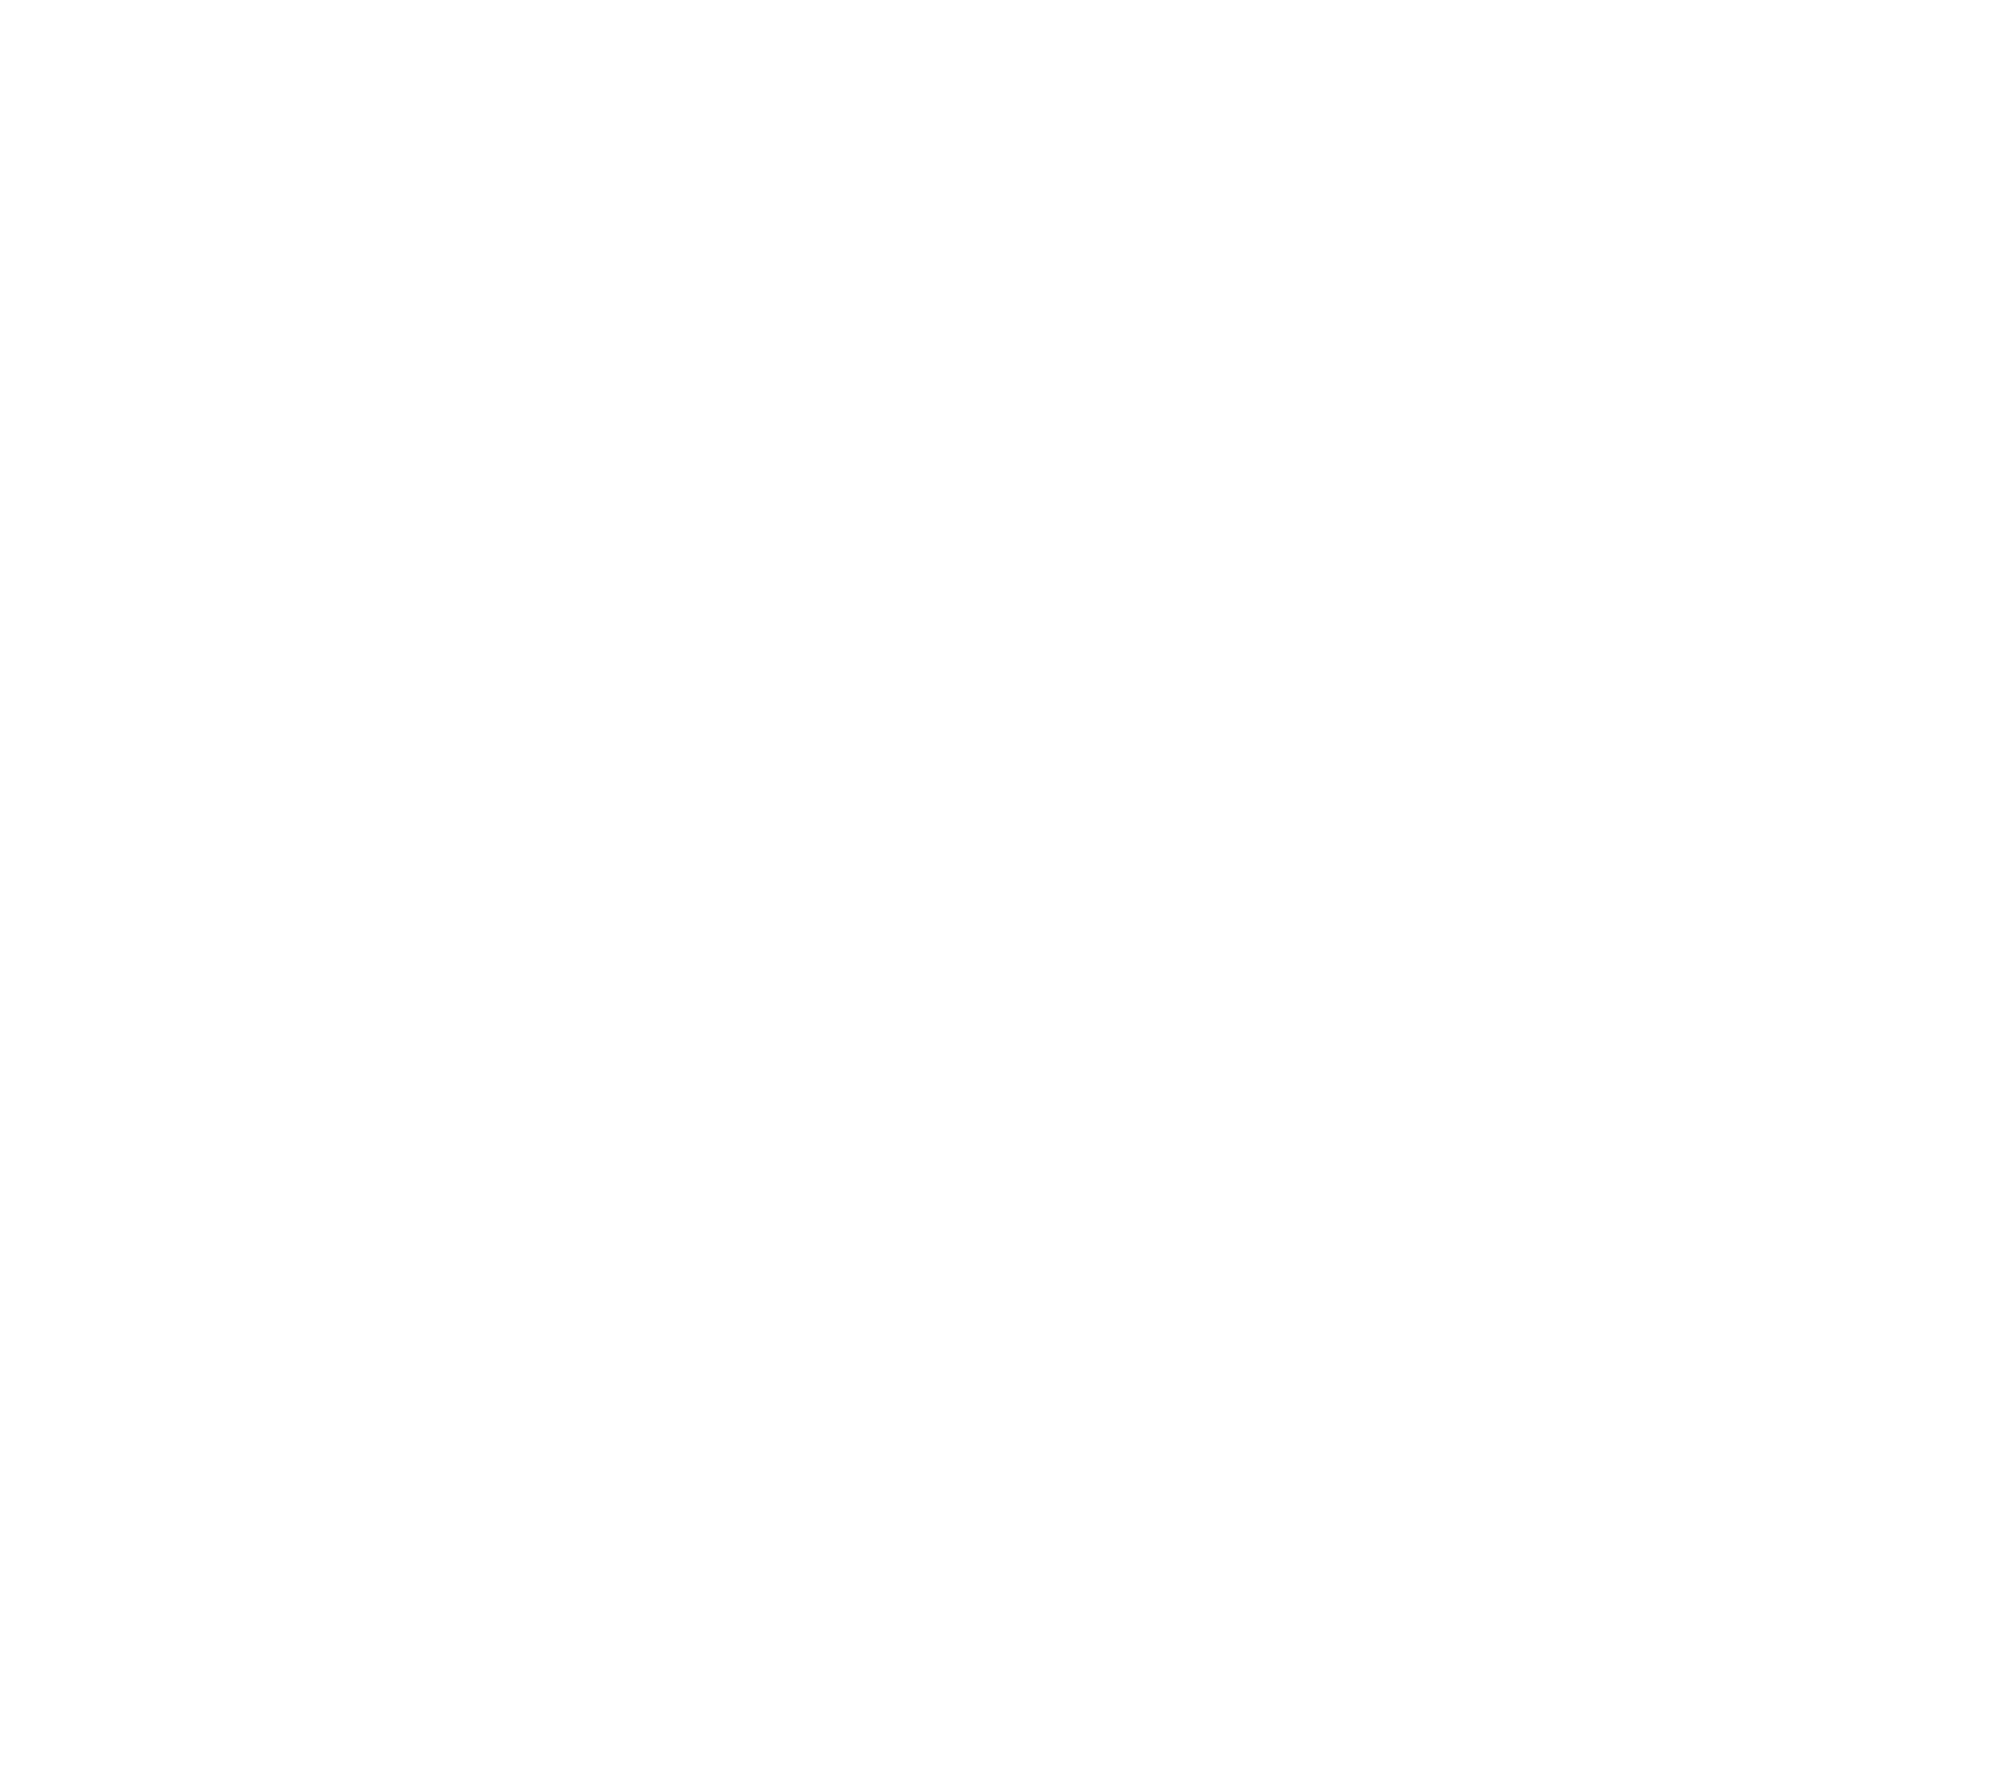 NorthStar Sports Complex - Explore Alexandria Minnesota